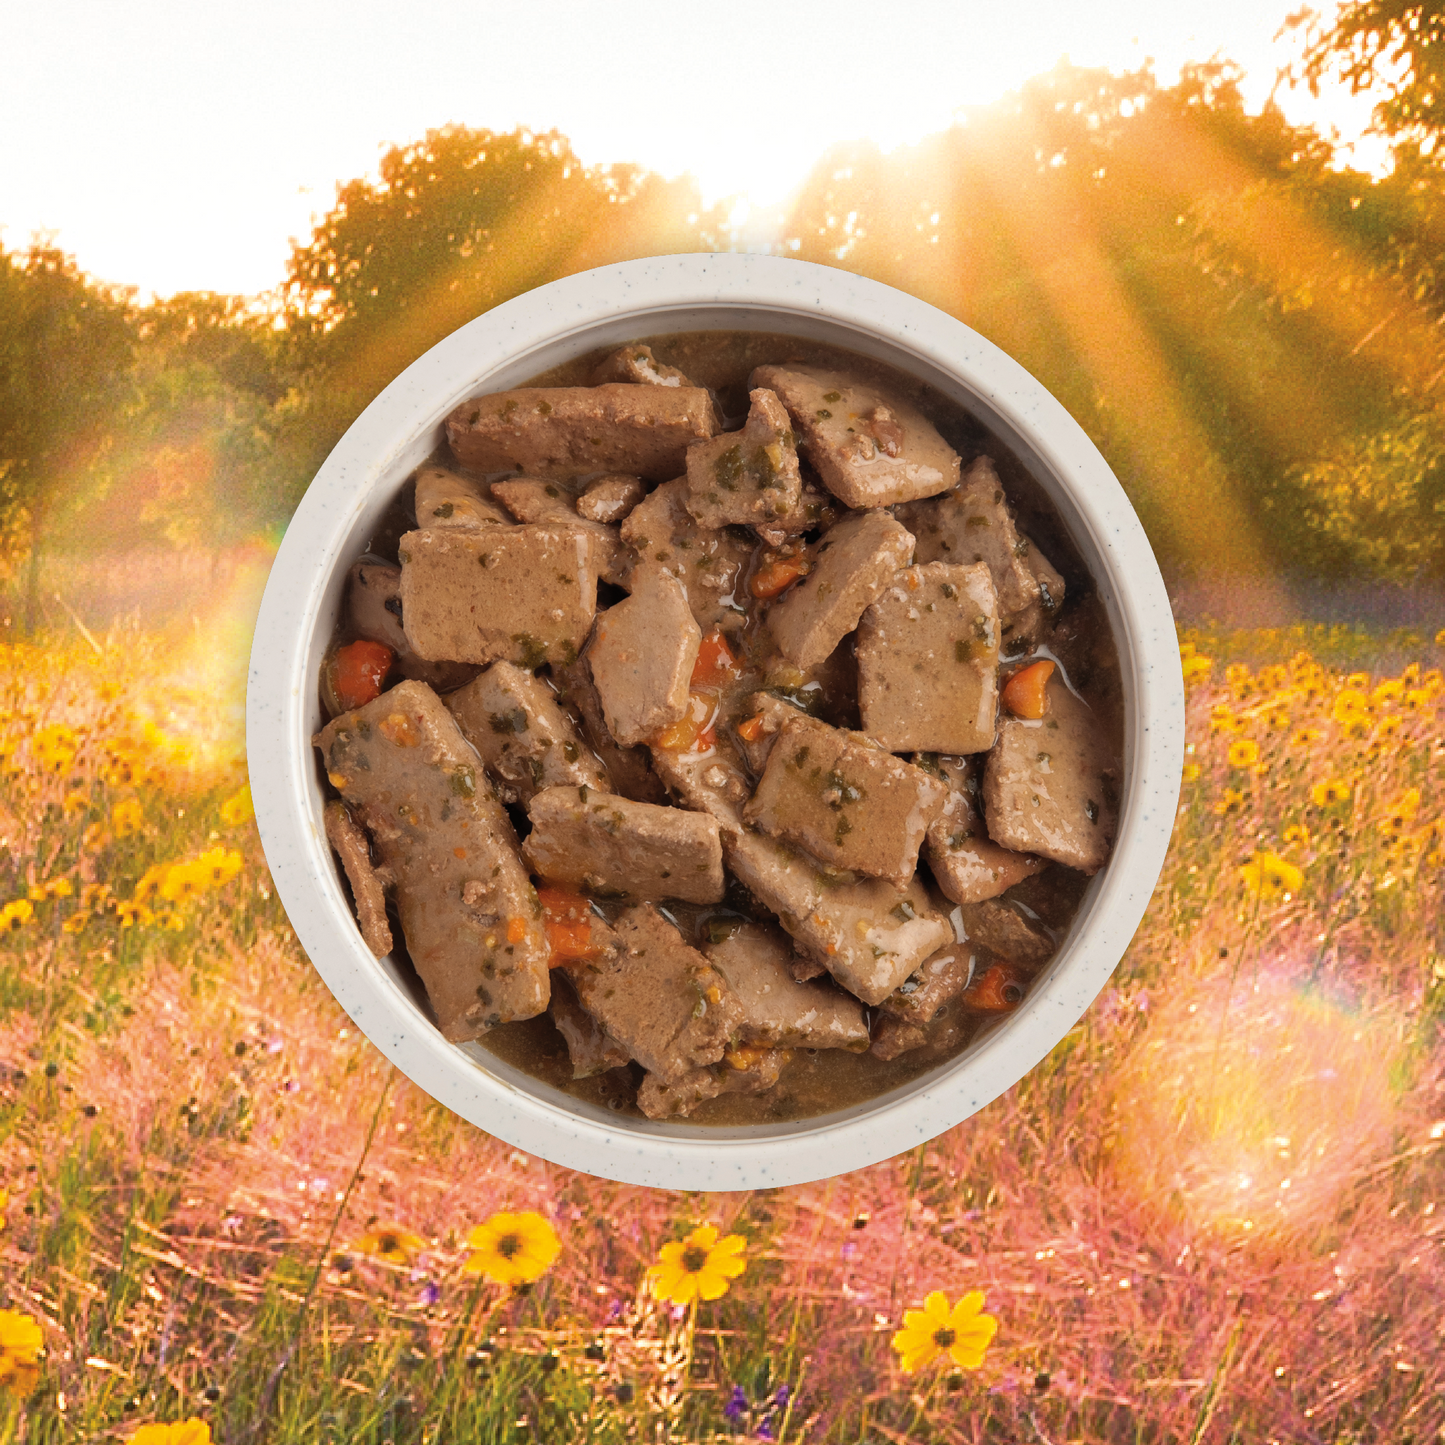 Acana Premium Chunks, Pork Recipe in Bone Broth Wet Dog Food, 12.8-oz, Case of 12